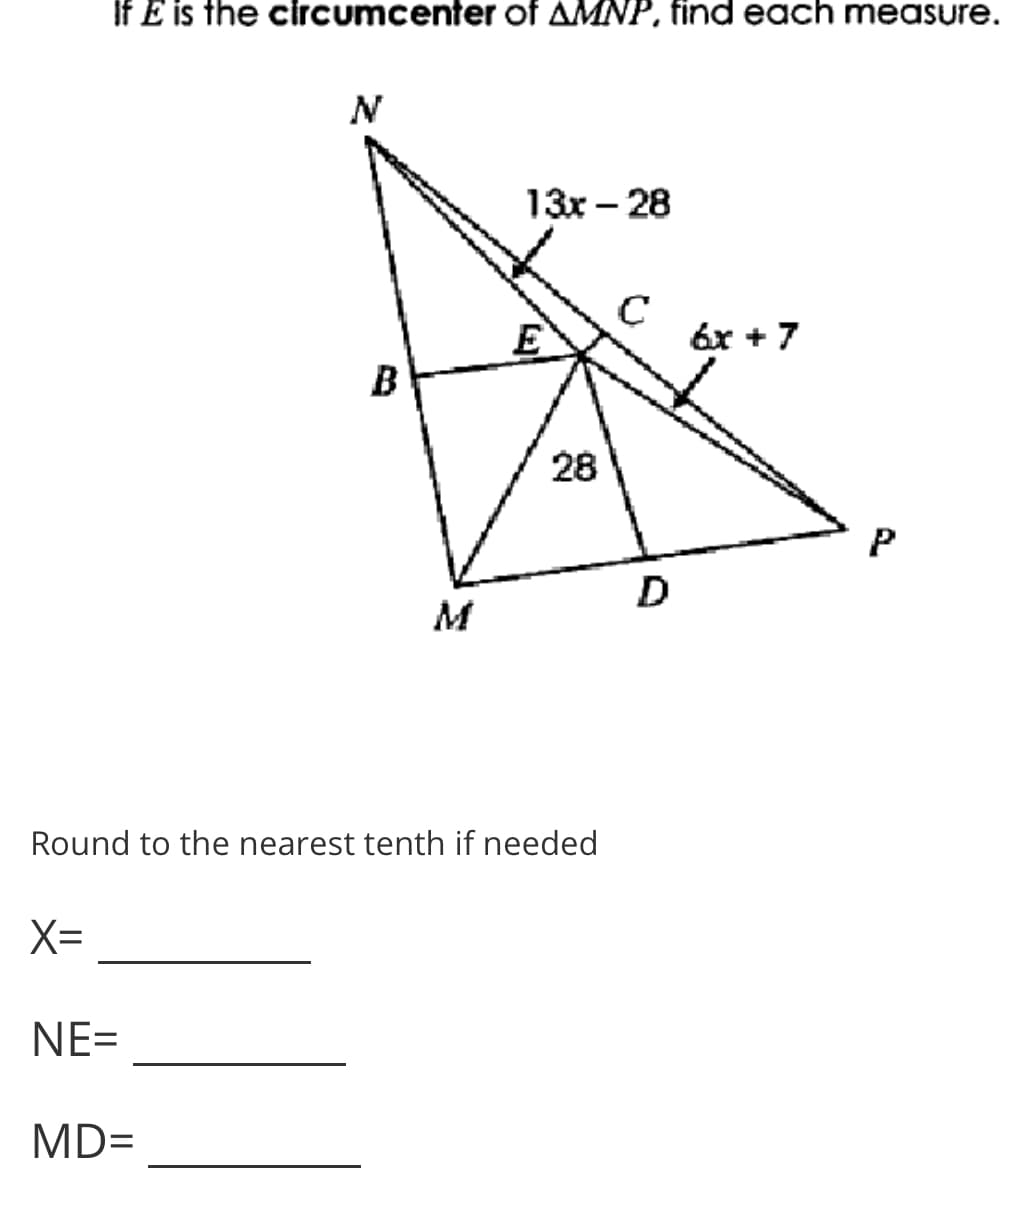 If E is the circumcenter of AMNP, find each measure.
N
13x - 28
E
6x +7
B
28
D
M
Round to the nearest tenth if needed
X=
NE=
MD=
